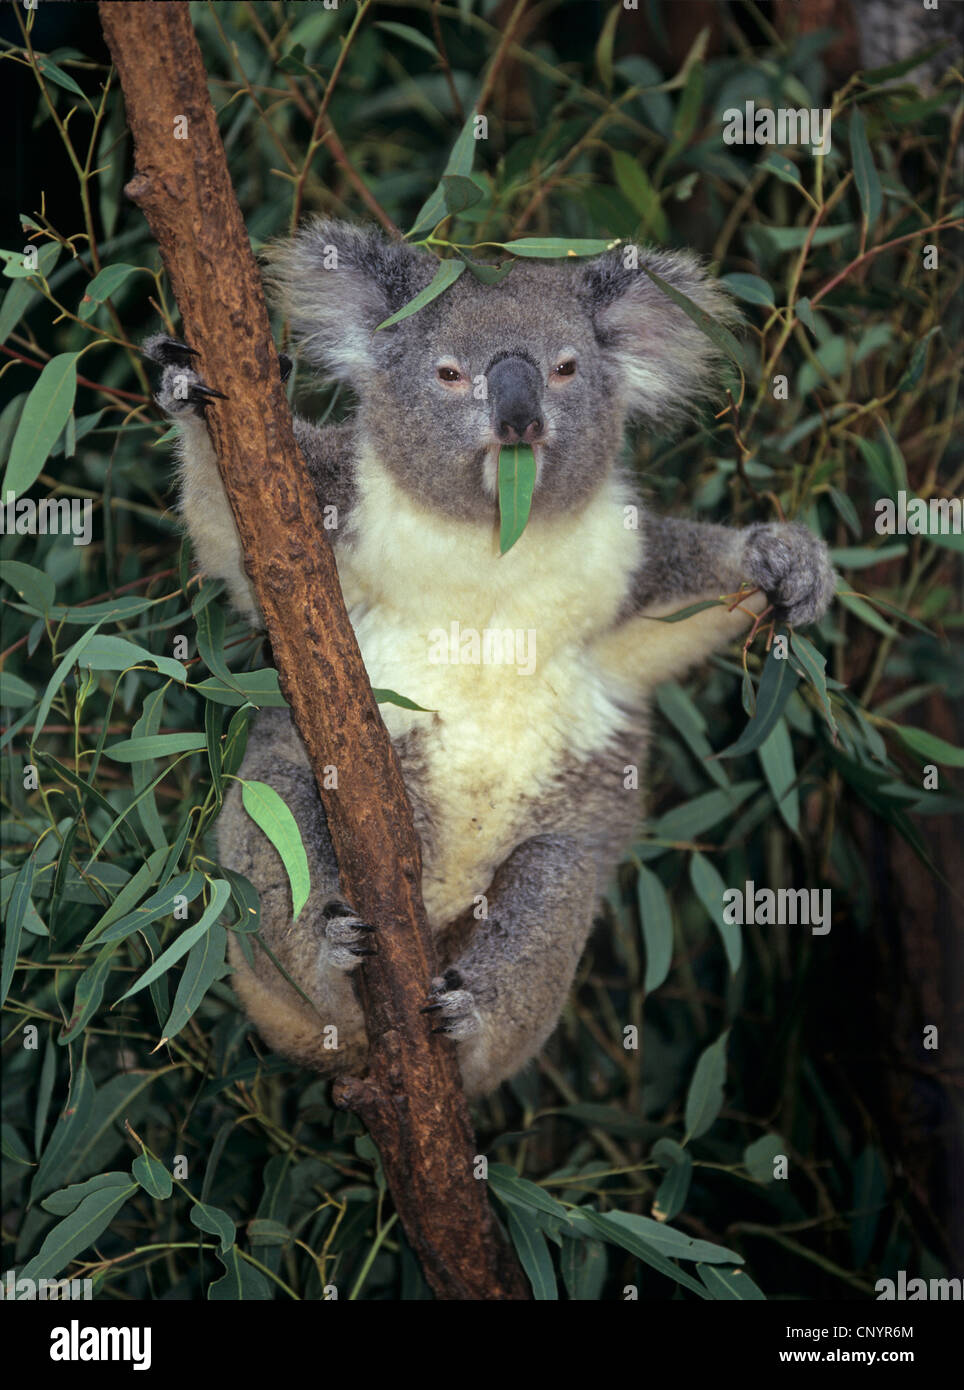 koala, koala bear (Phascolarctos cinereus), sitting on a branch and eating eucalyptus leaves, Australia Stock Photo